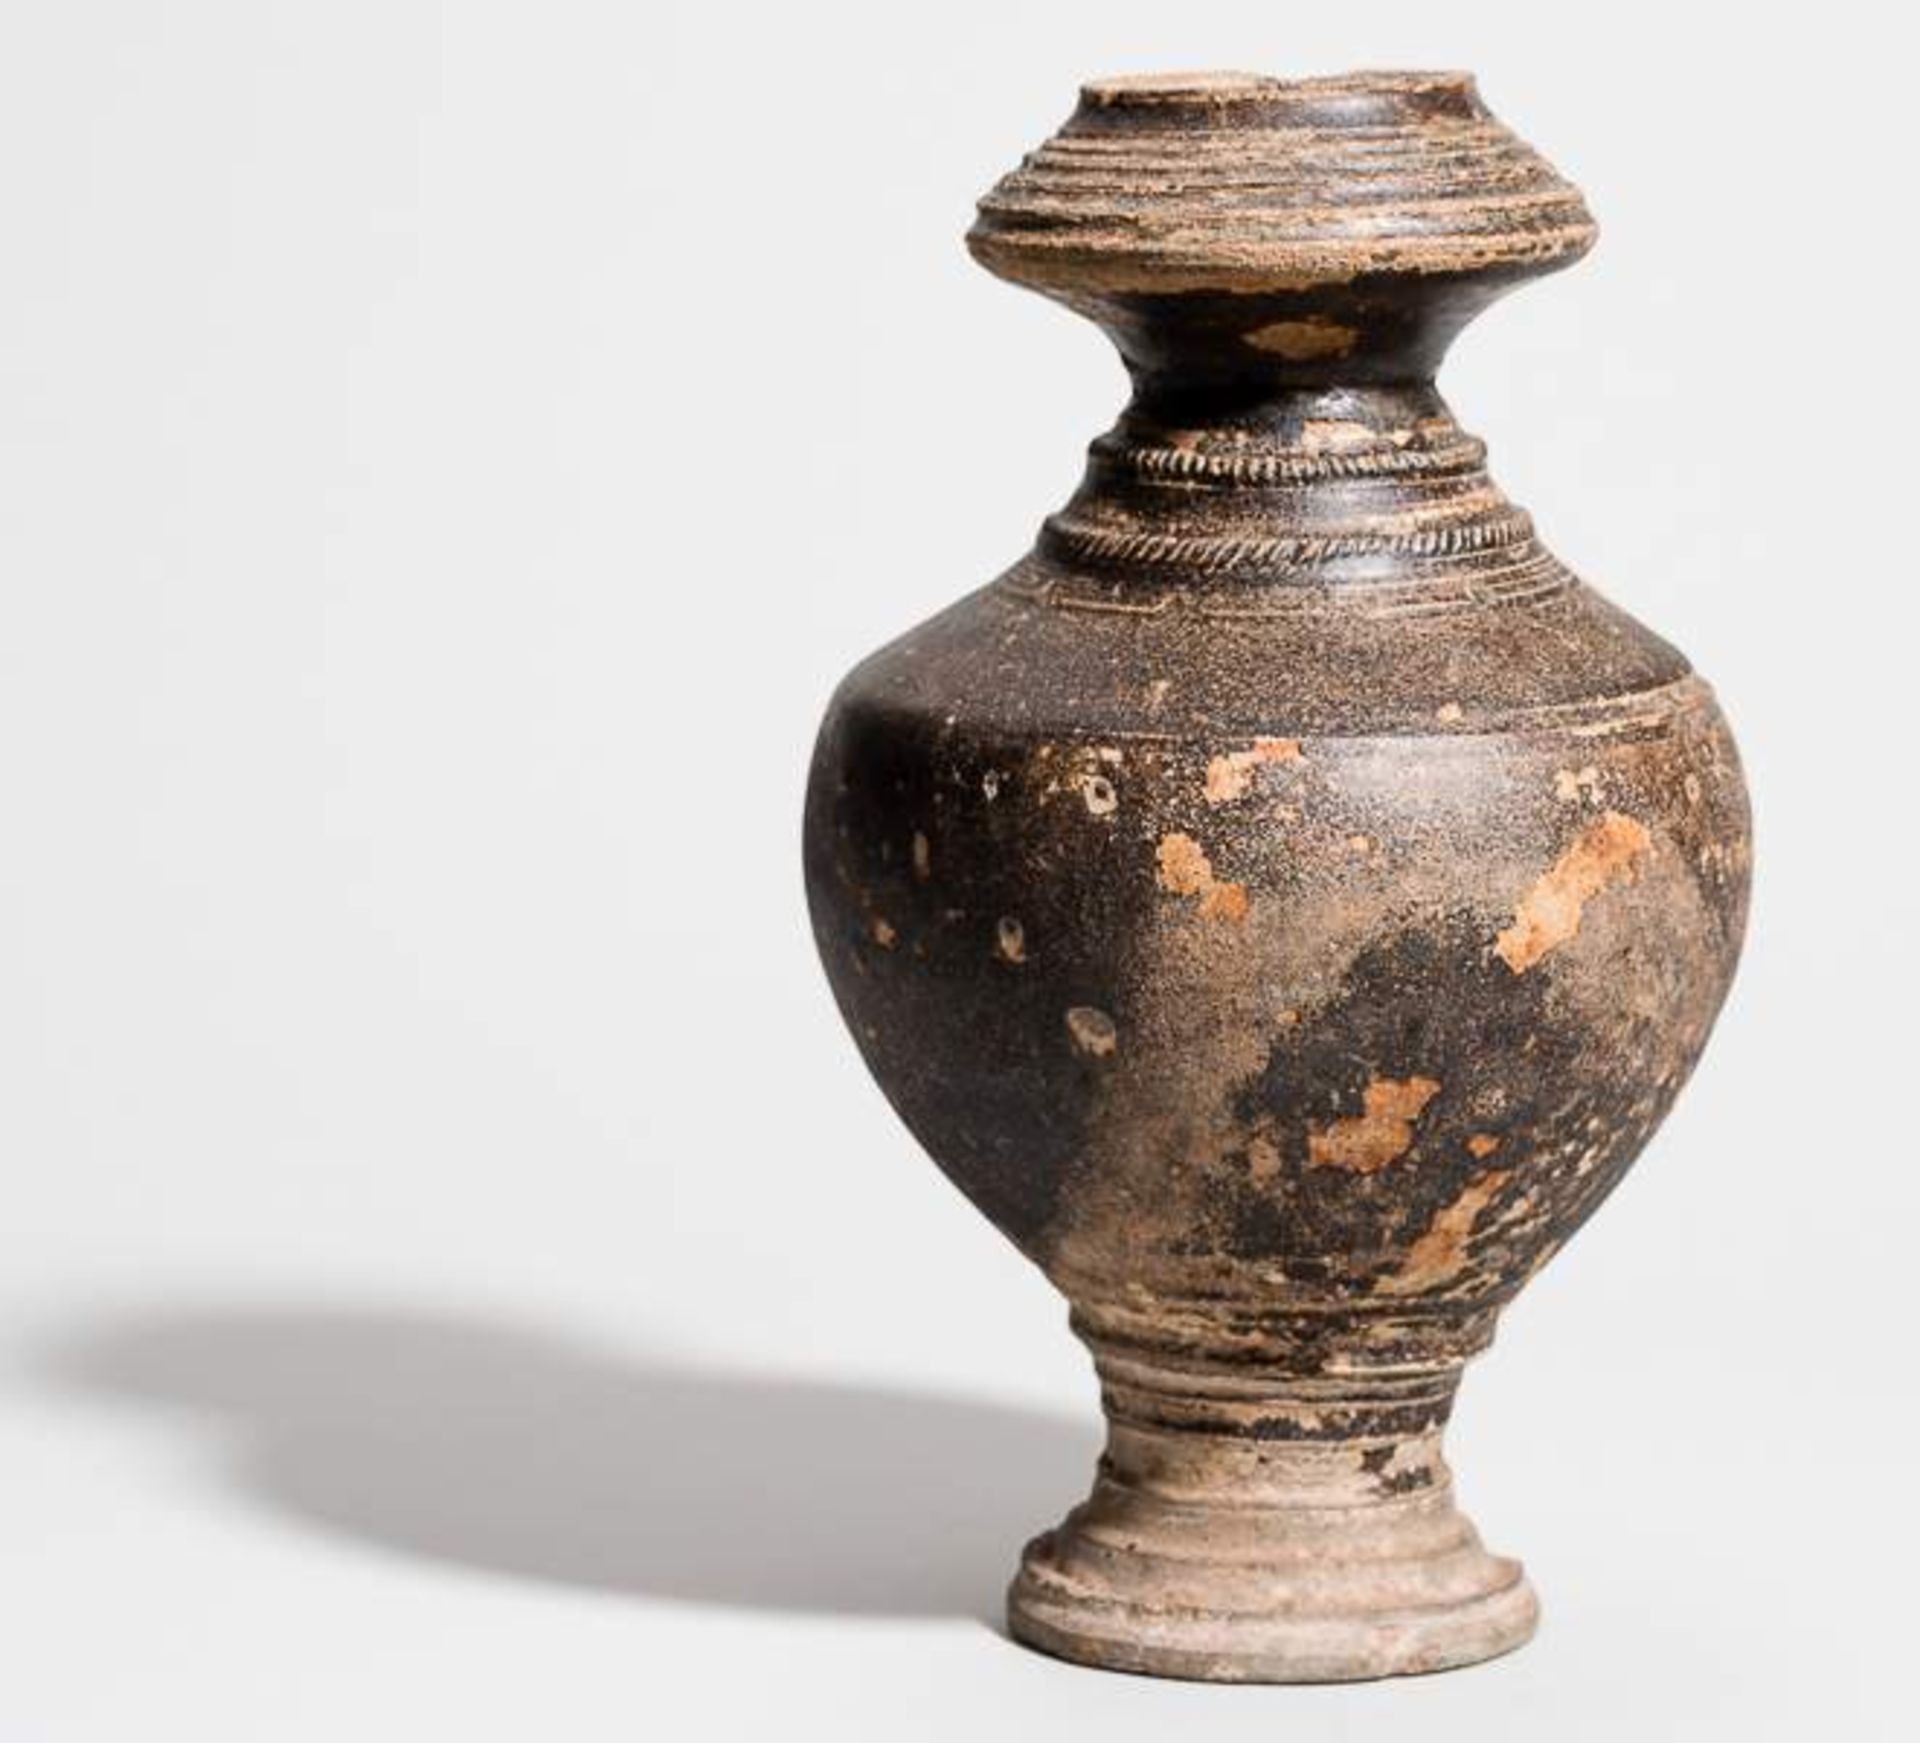 VASENFÖRMIGES GEFÄSS Keramik. Kambodscha, Altes Königreich Khmer, 11. bis 12. Jh. Seltener Typus, - Image 7 of 11